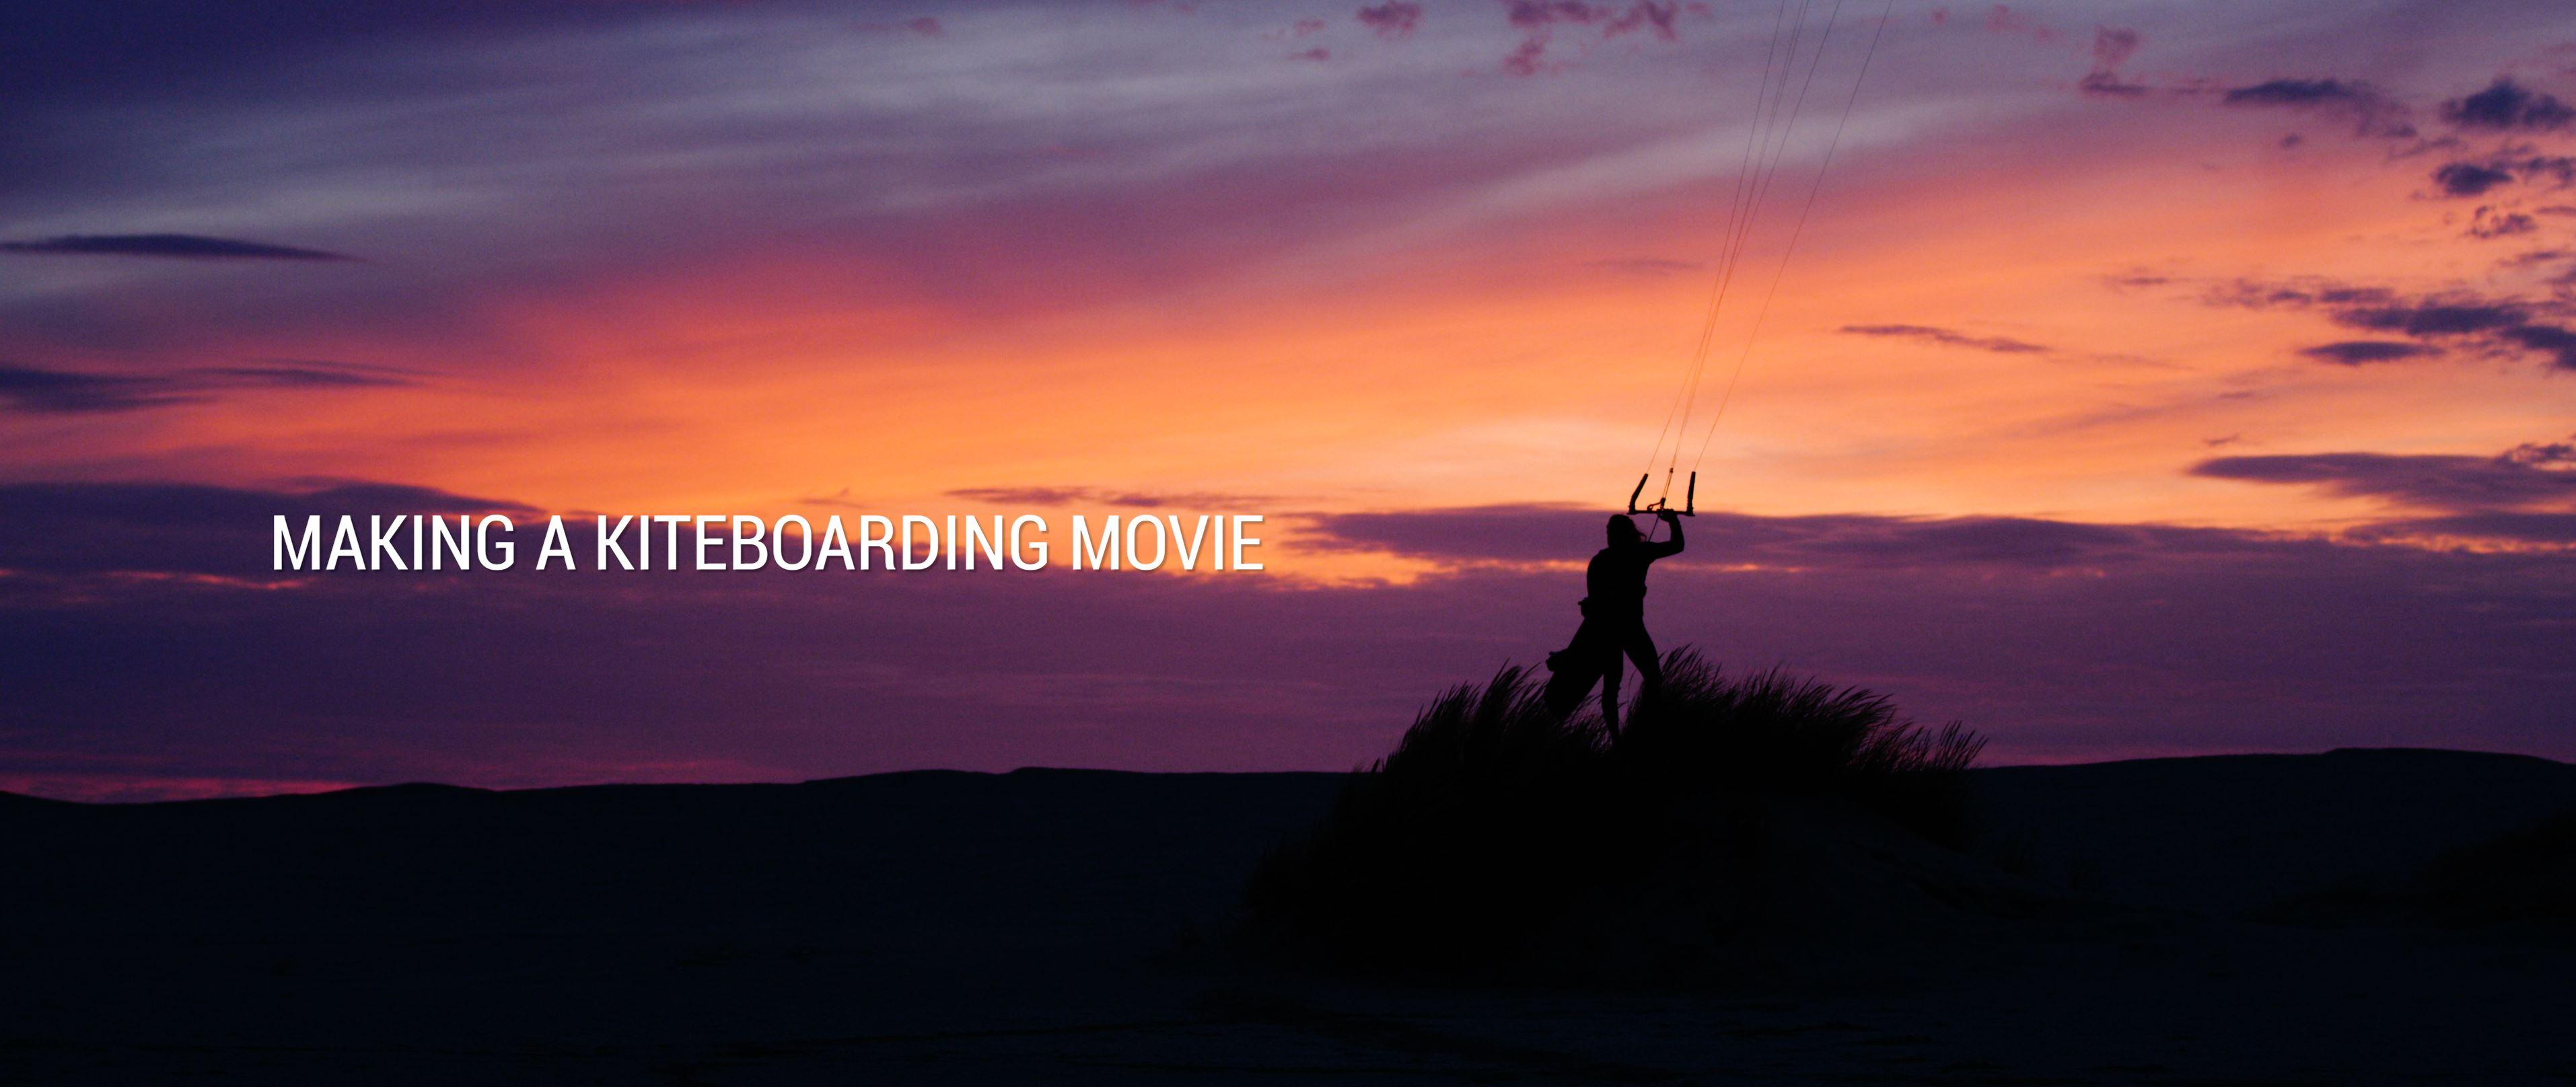 Making a kiteboarding movie header